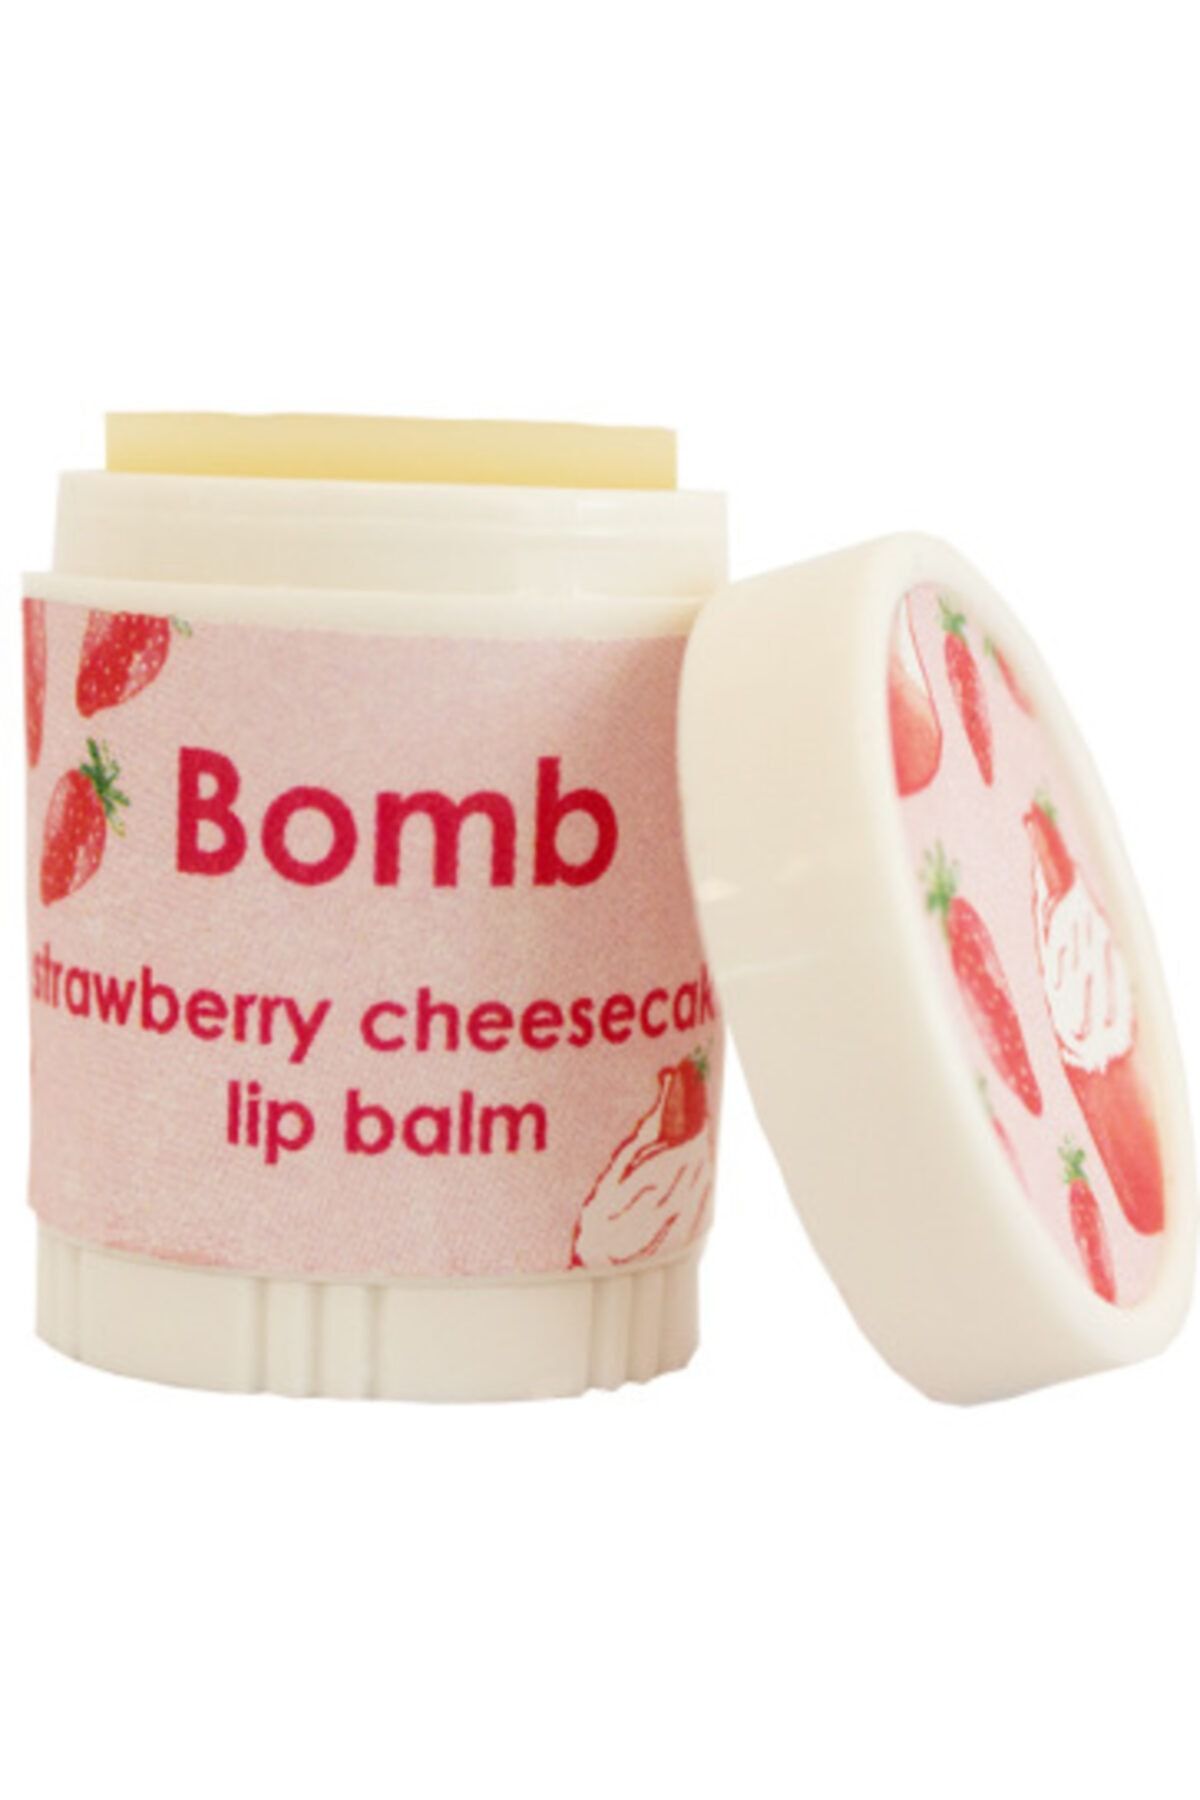 Бомб косметика бальзам для губ. Lip Balm. Strawberry Lip Balm. Beauty Bomb бальзам для губ Lip Balm. Бьюти бомб бальзам для губ Lip Balm Strawberry Milk.